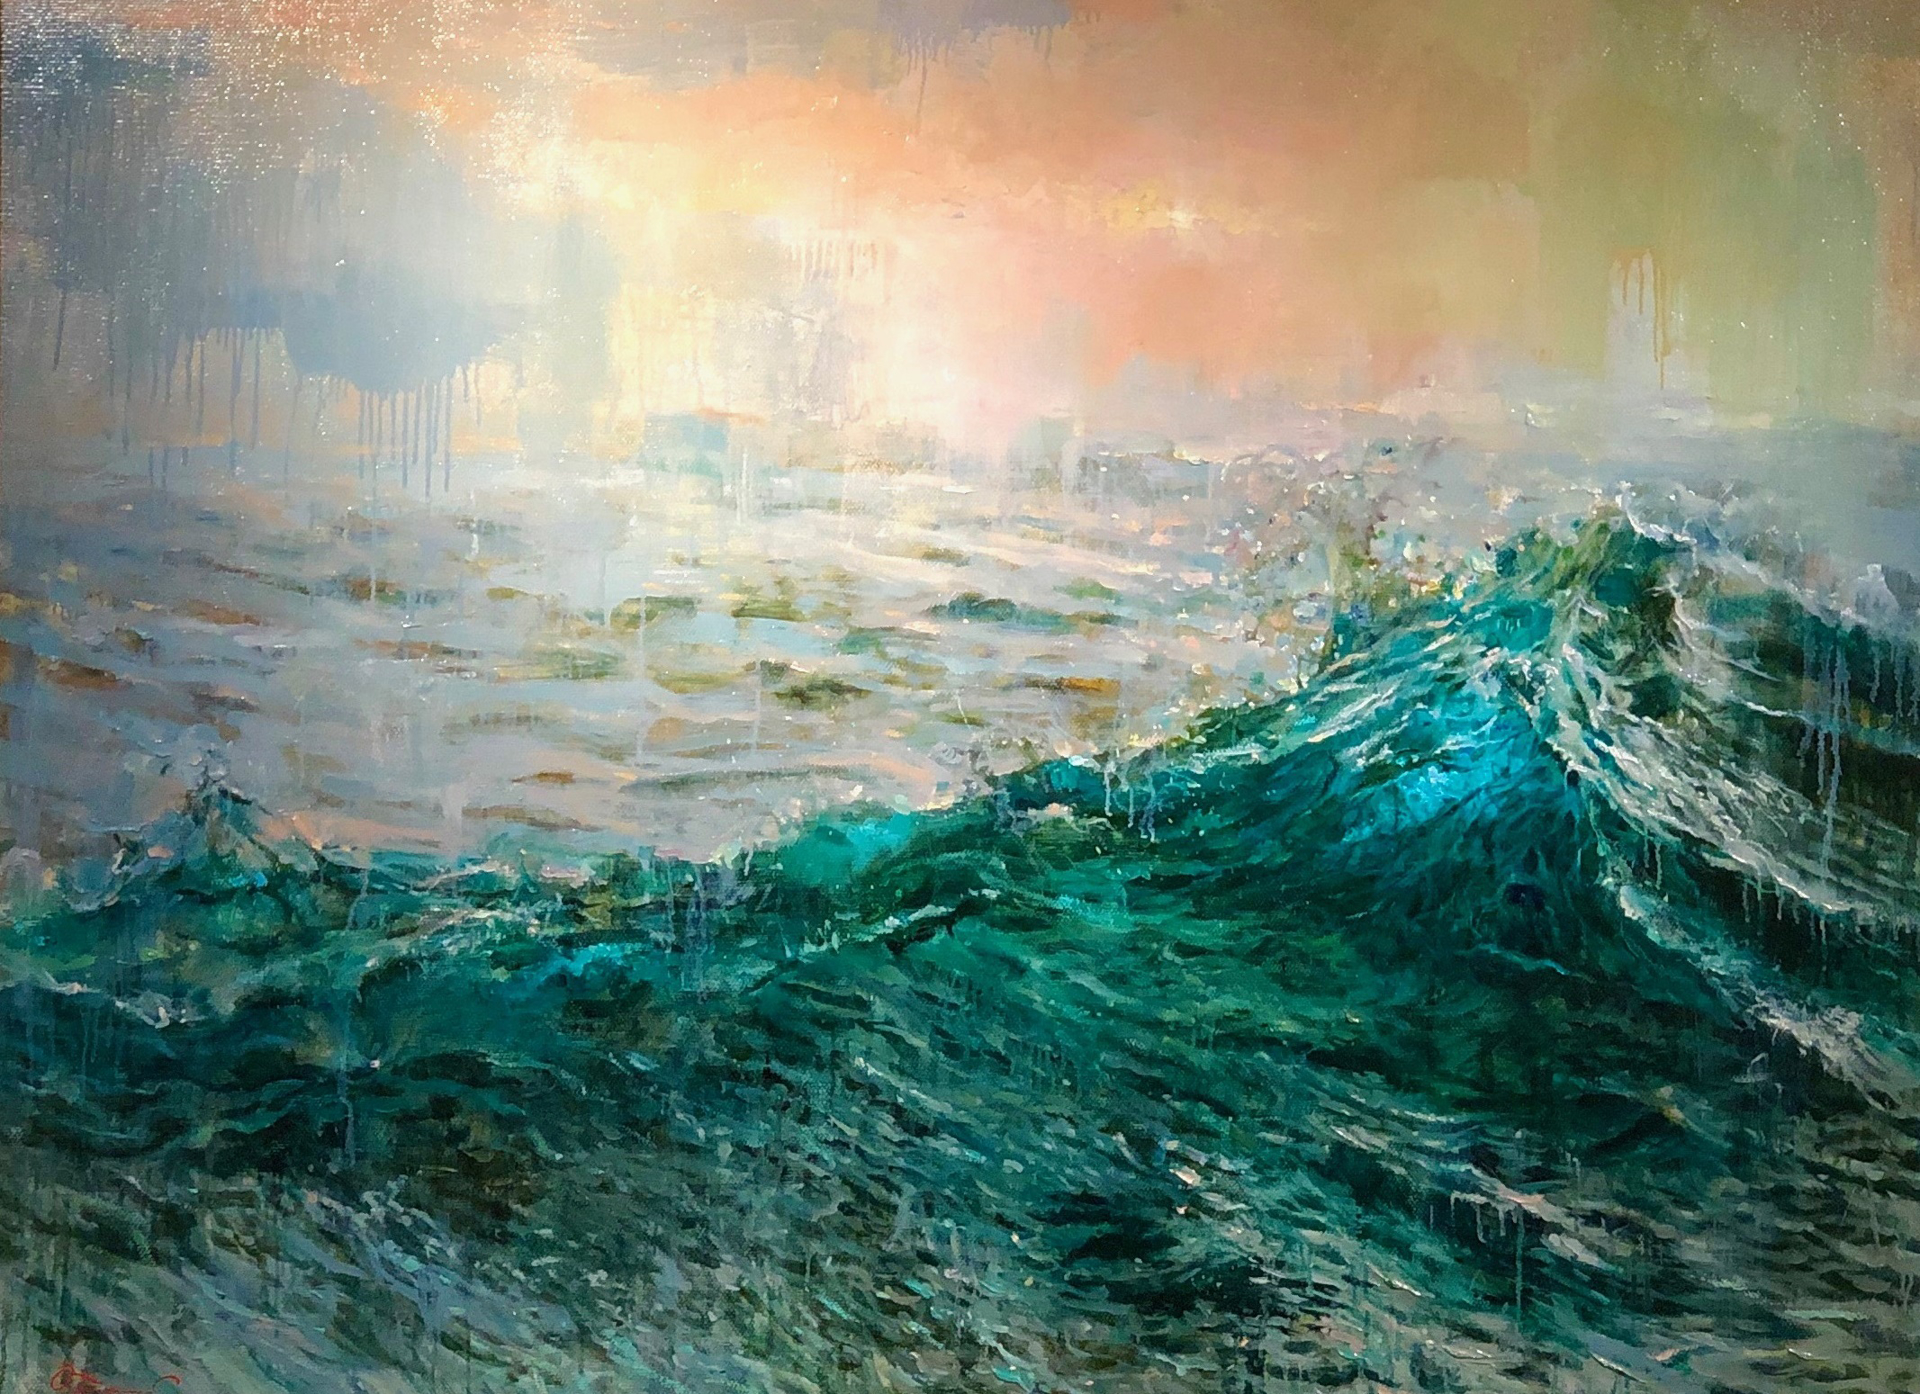 "Aquamarine Wave" by Oleg Trofimov